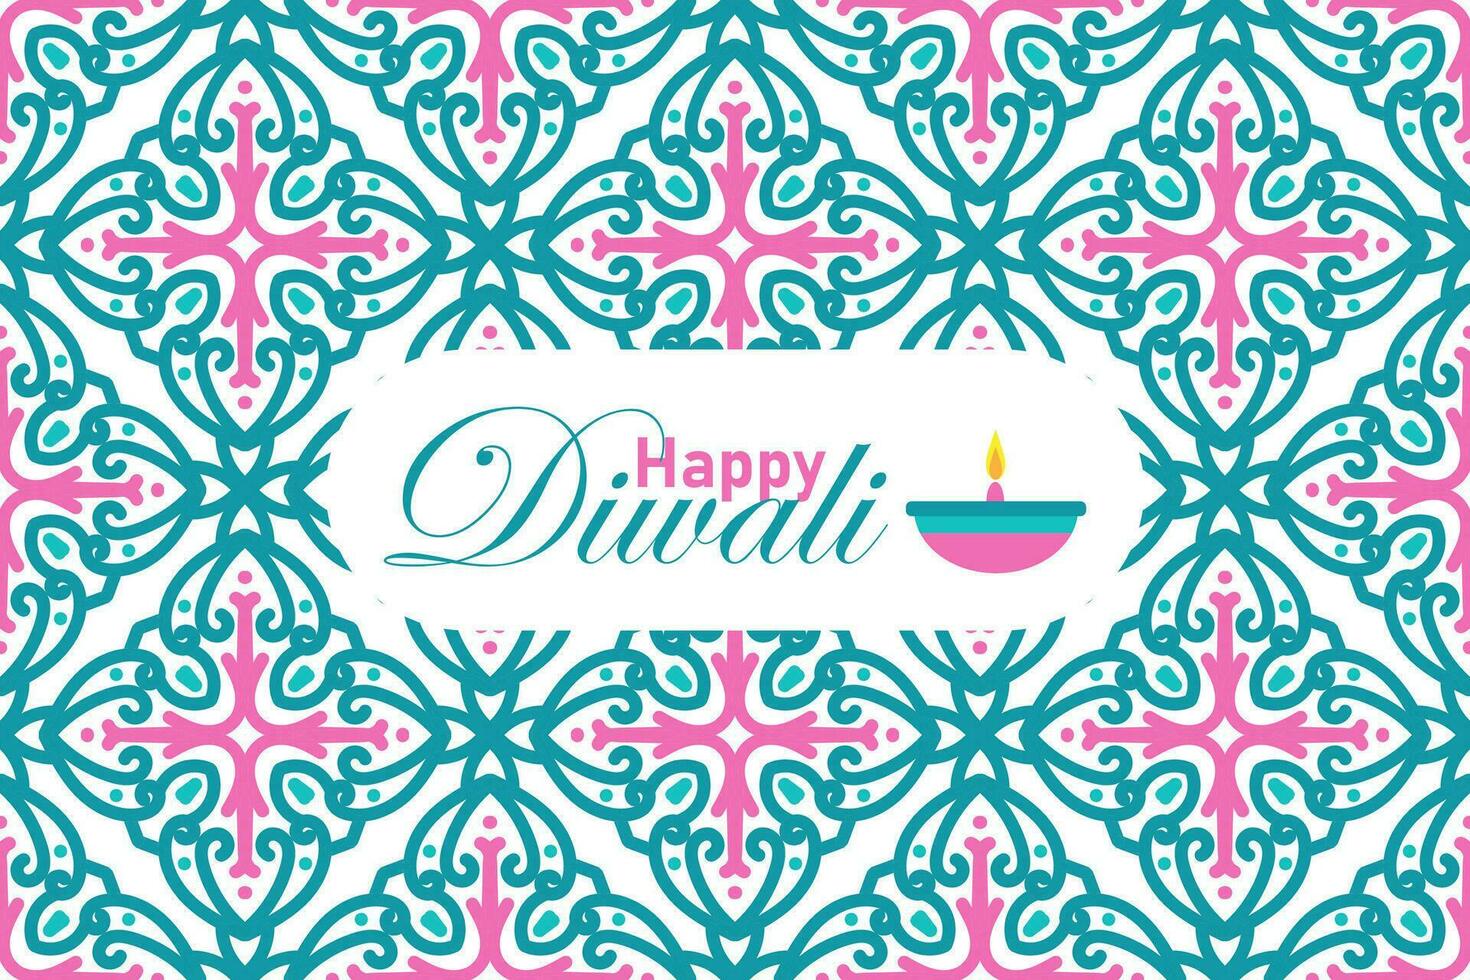 Indian festival Happy Diwali seamless pattern Background, Diwali celebration greeting card, vector illustration design.